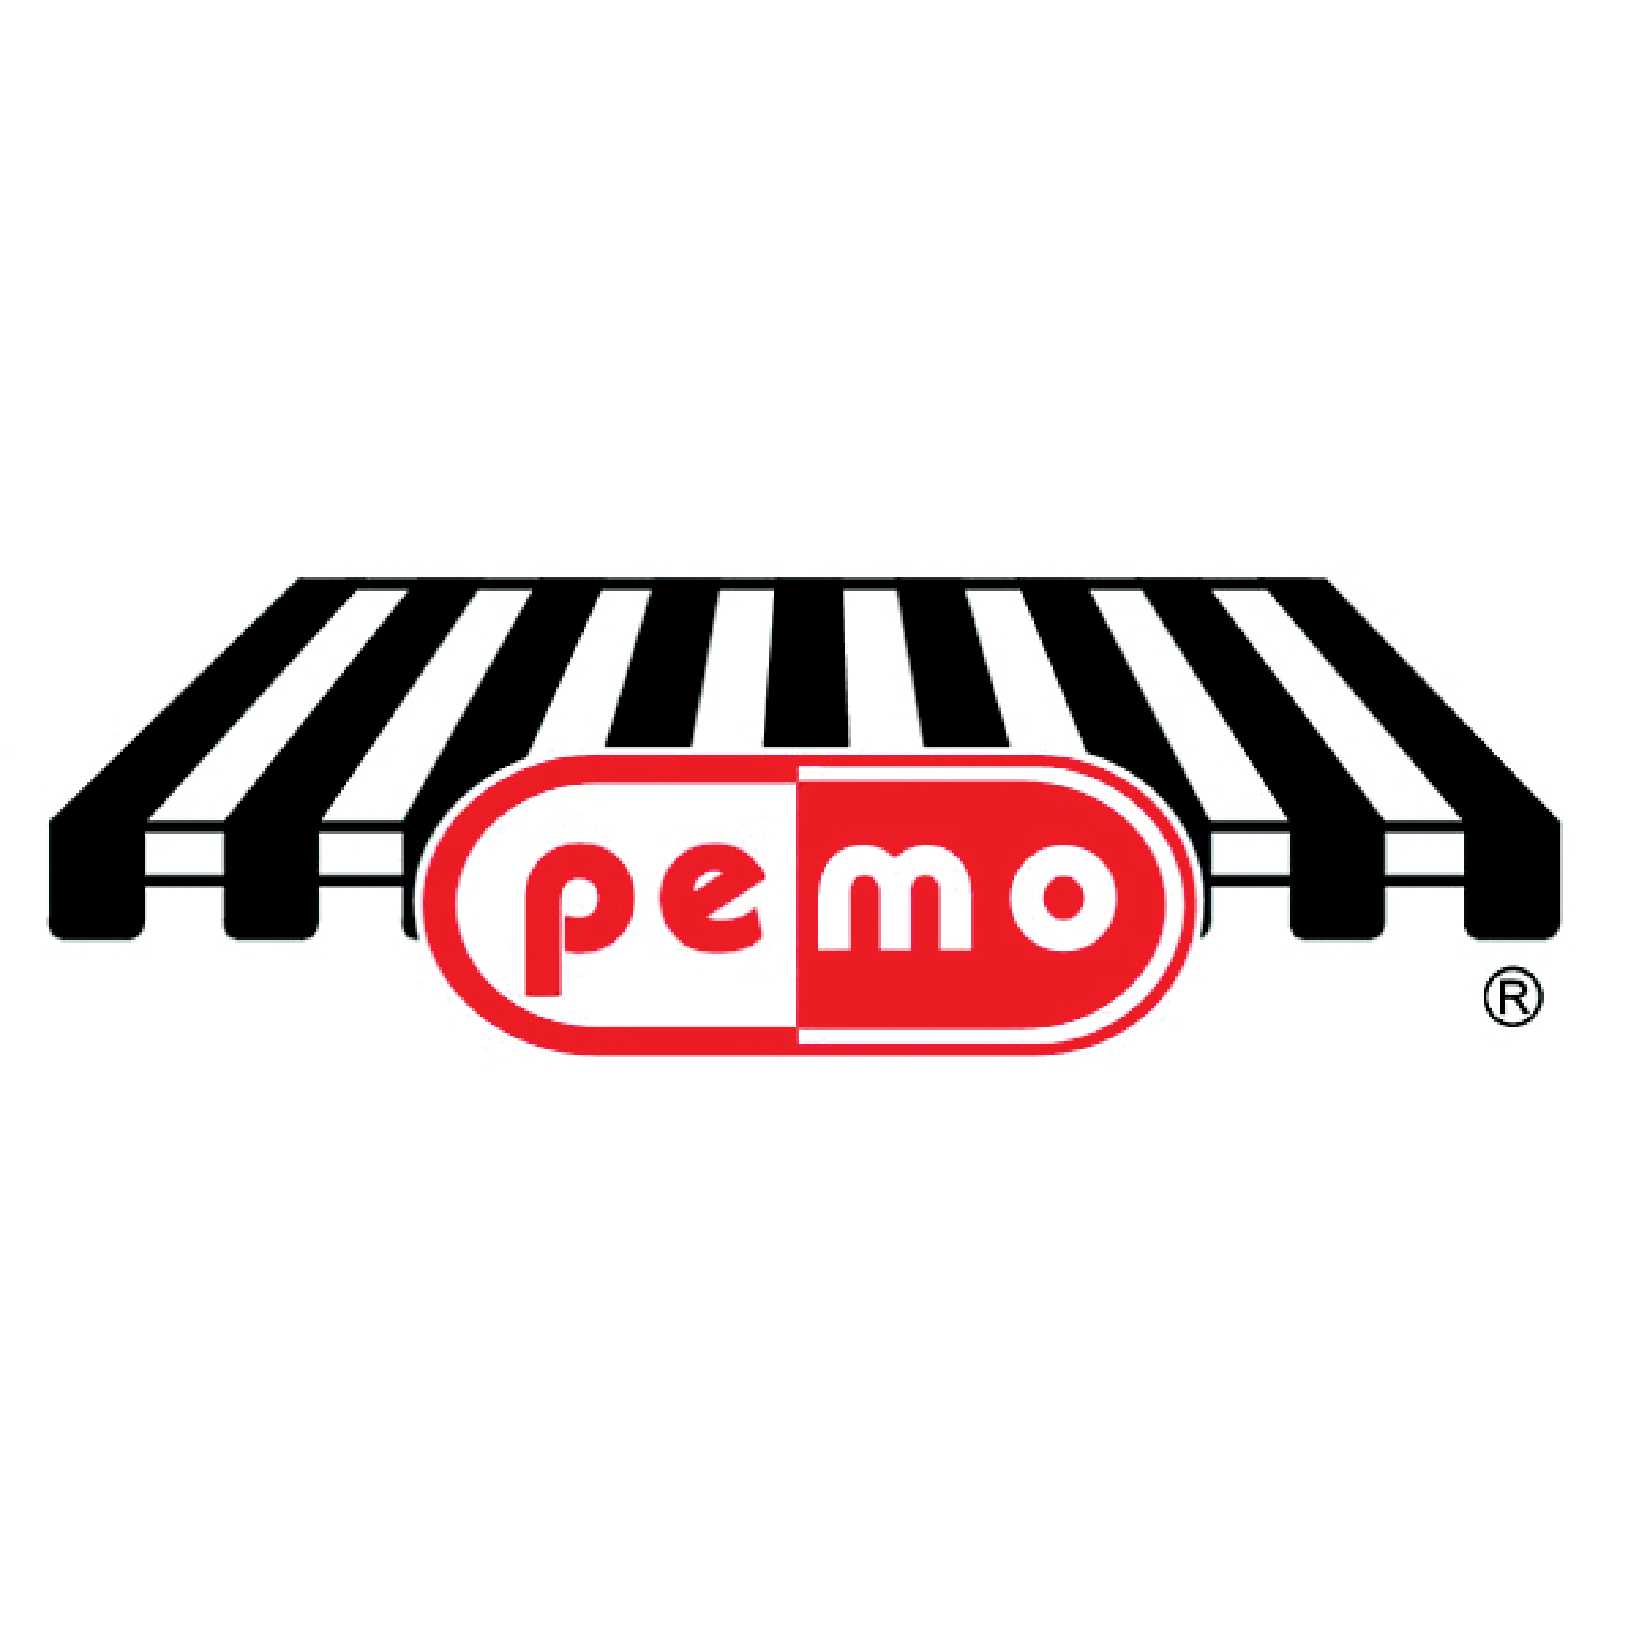 Pemo Rollladen & Markisen GmbH in Berlin - Logo